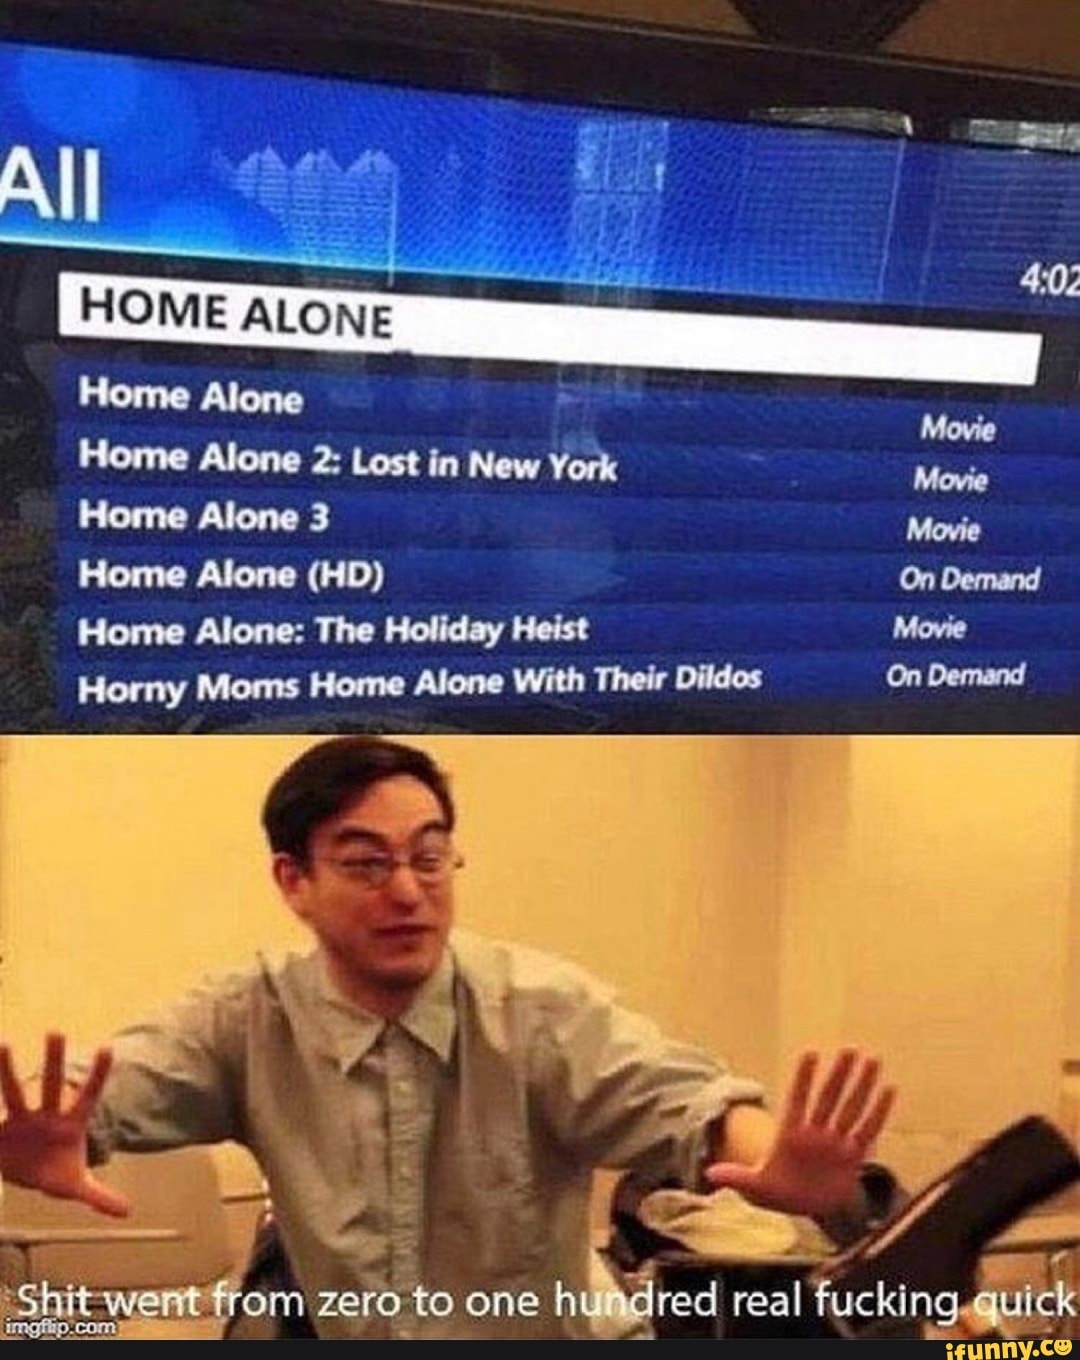 Movie Home Alone 2 Lost In New York Movie Home Alone 3 Movie Home